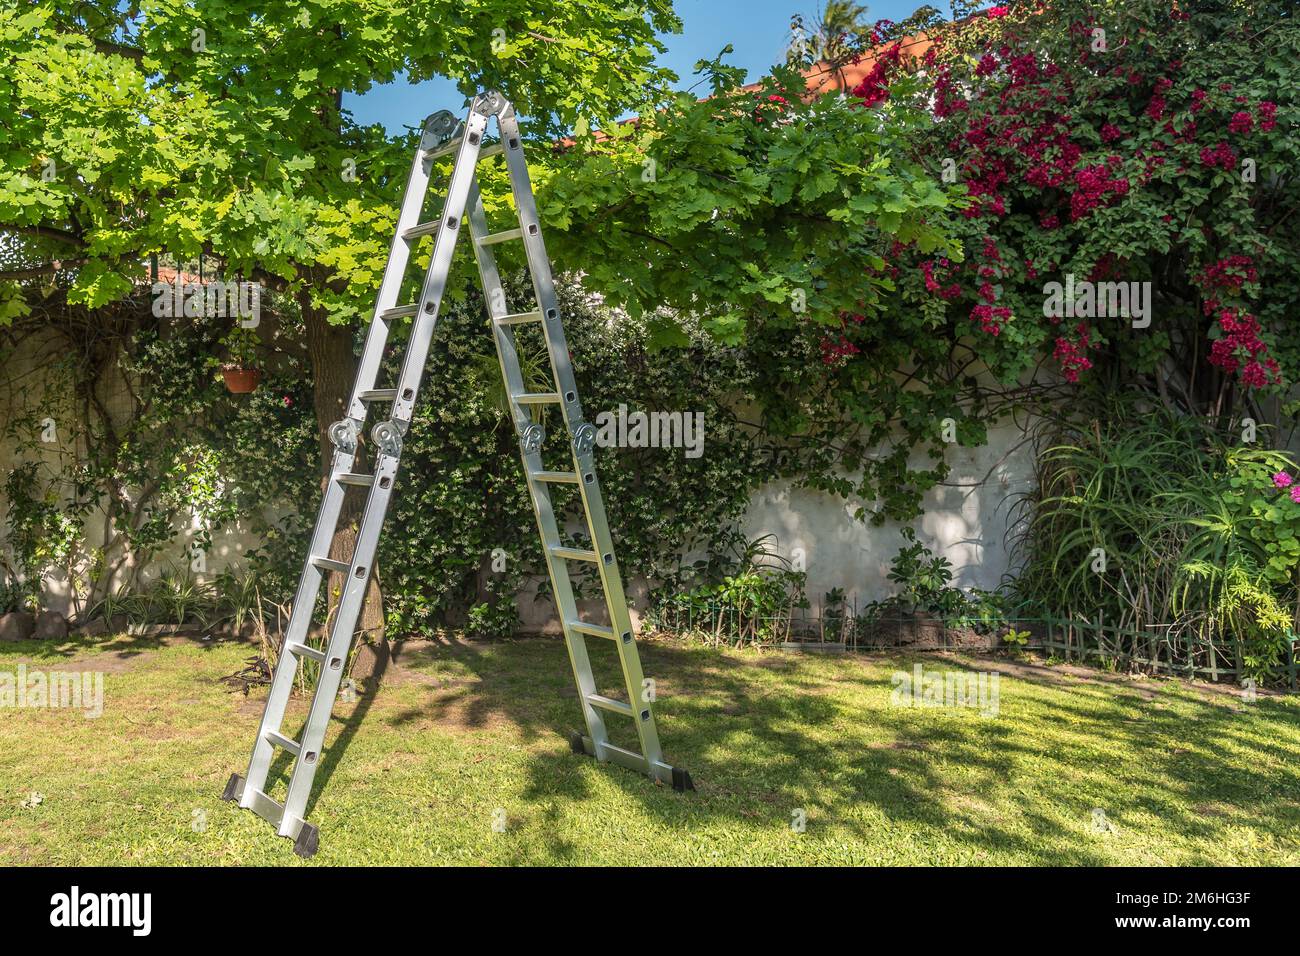 Aluminium ladder on the grass in the house garden Stock Photo